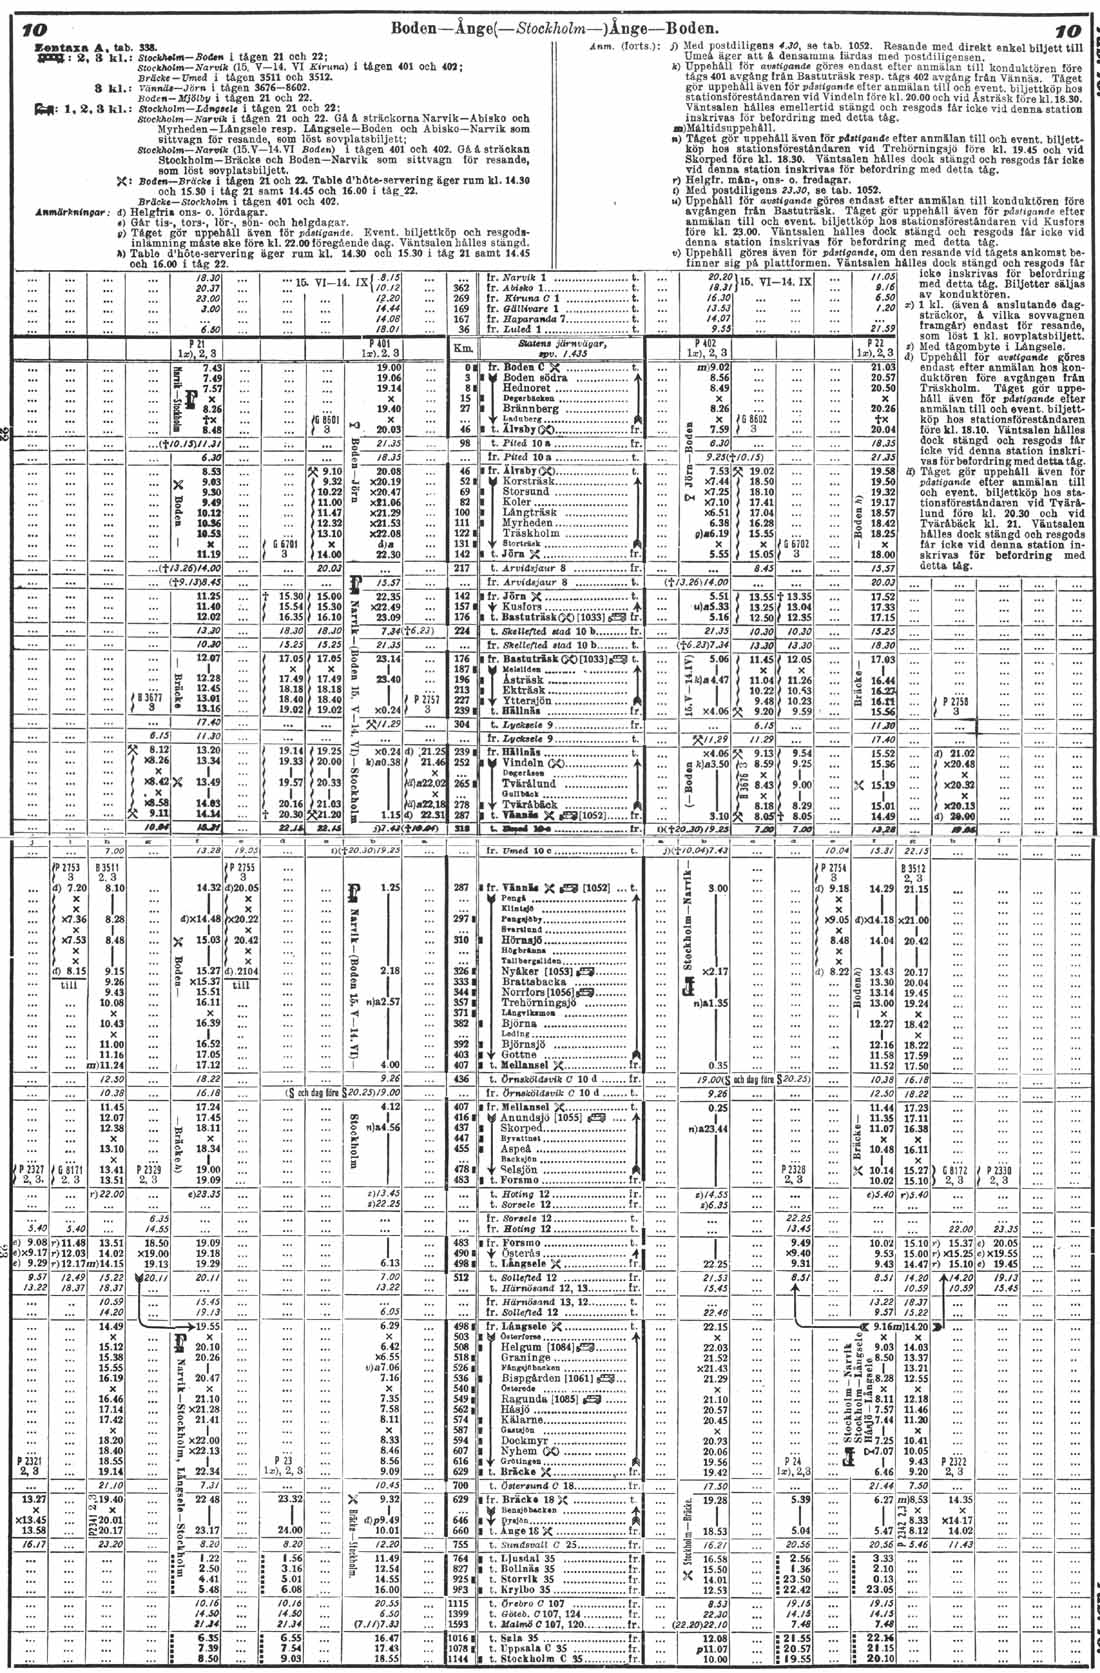 Timetable Boden - Ånge - Boden 1930